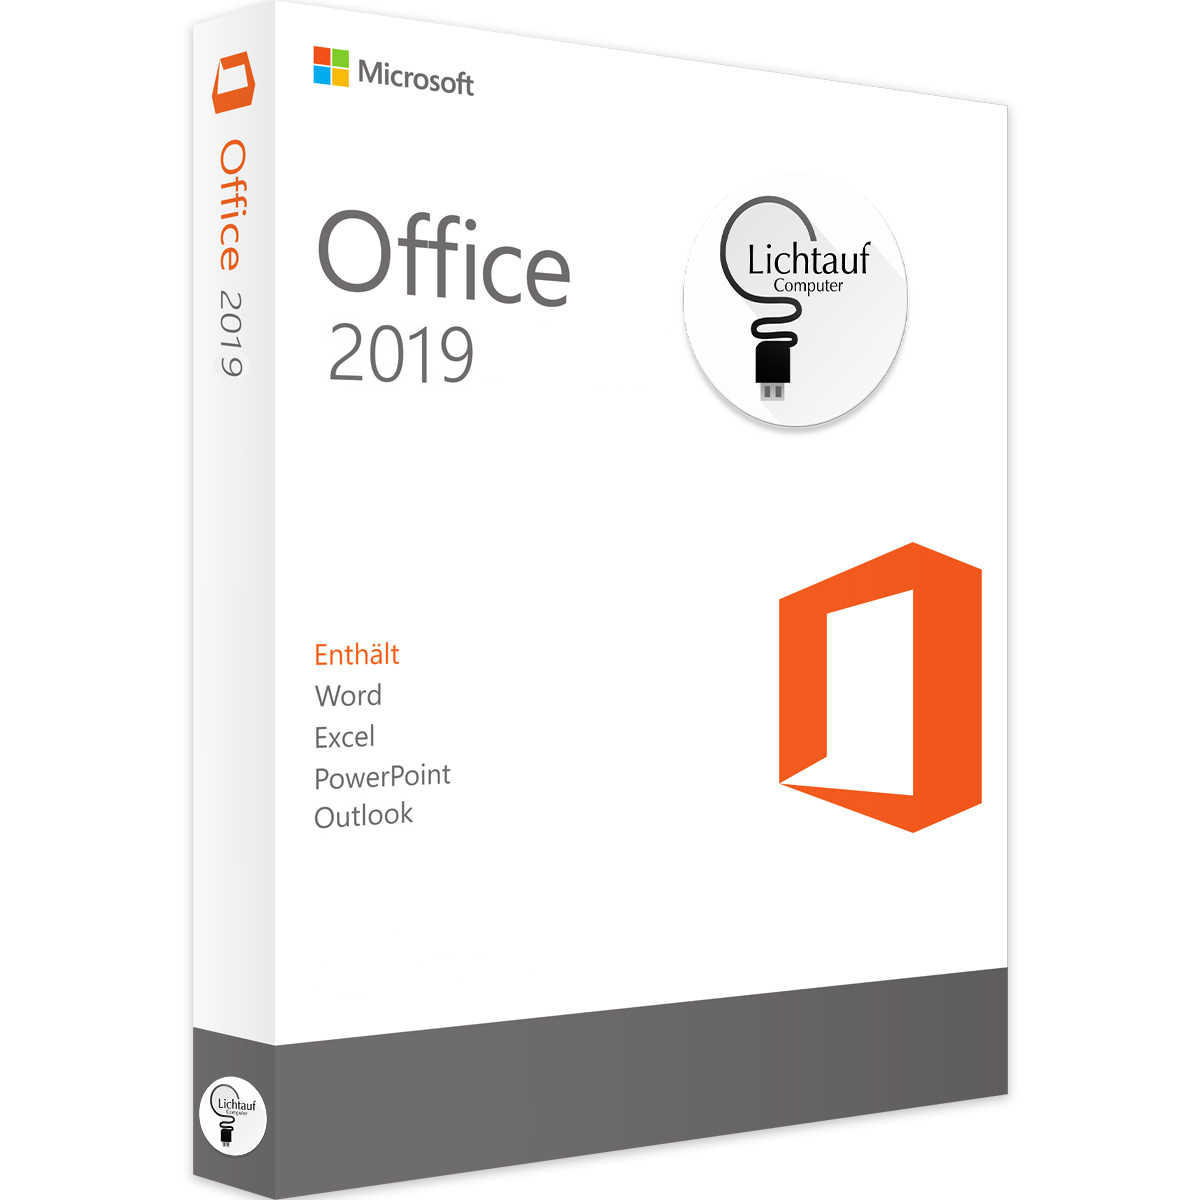 Microsoft Office 2019 als USB-Stick